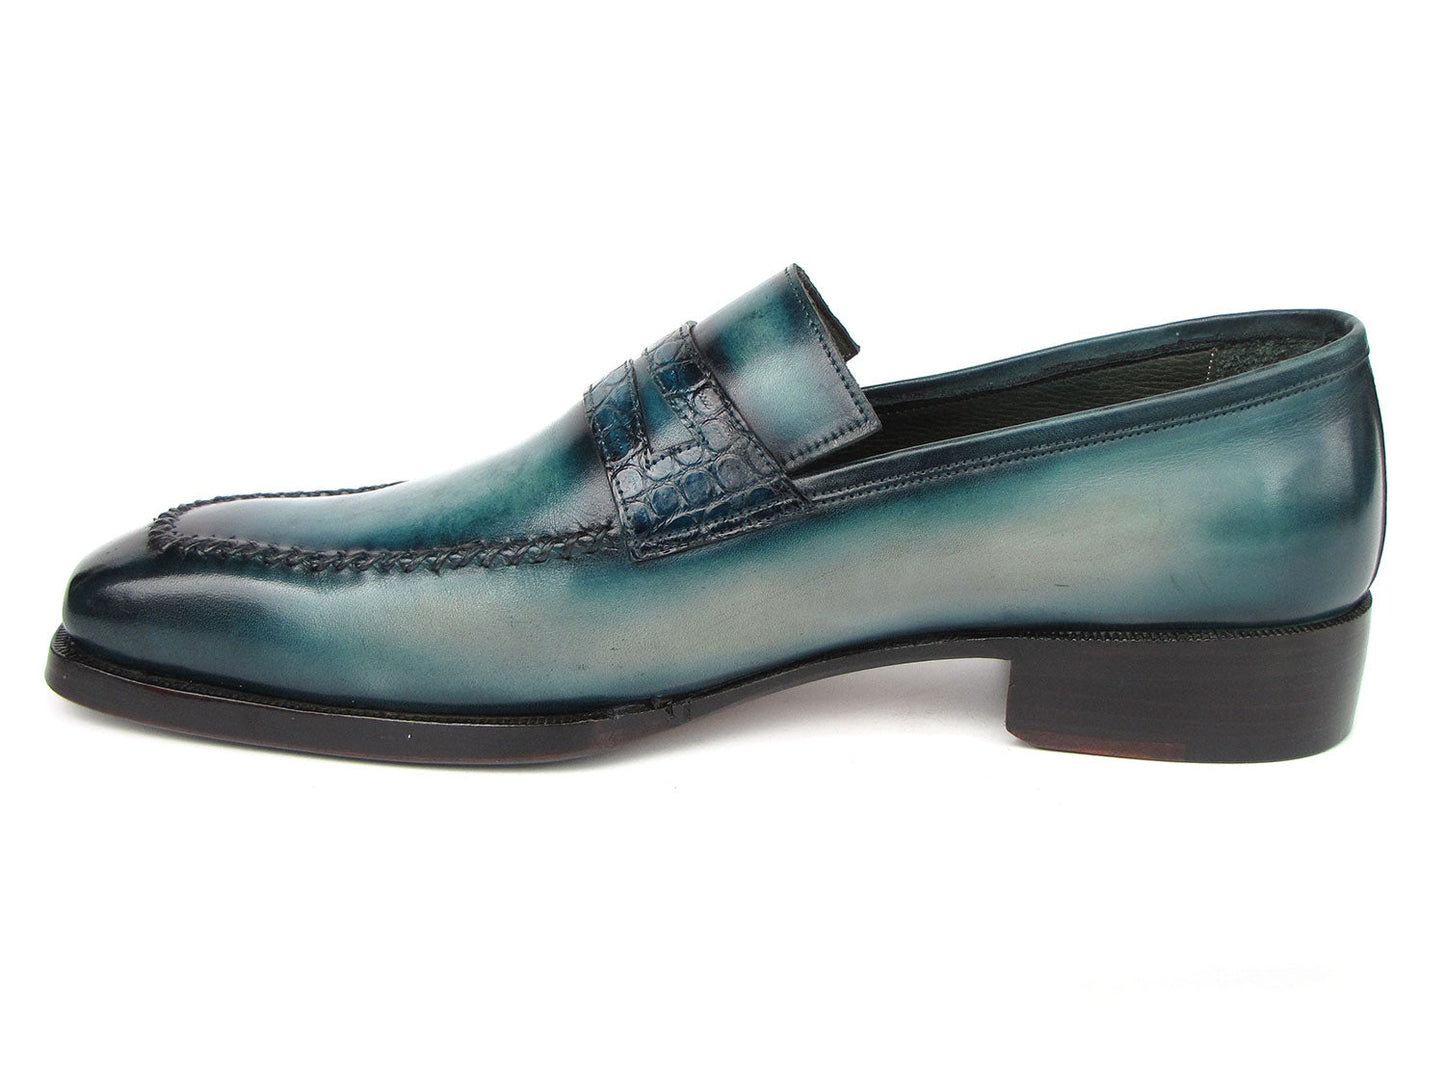 Paul Parkman Men's Turquoise Patina Handmade Loafers (ID#6944-TRQ)